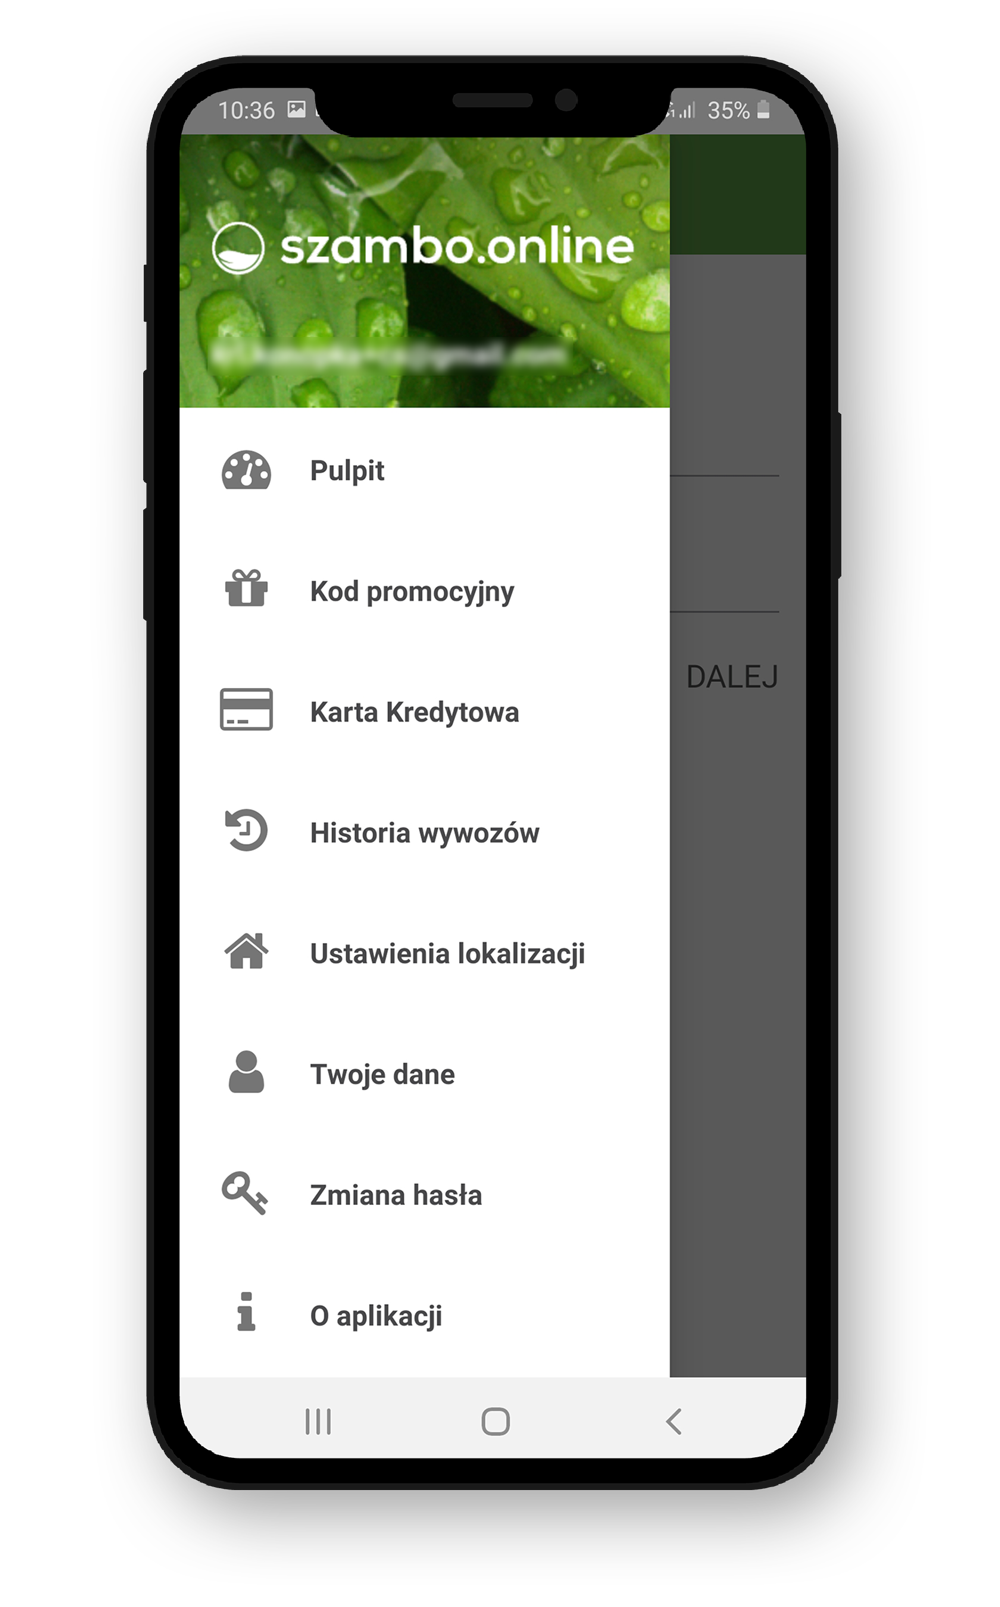 Szambo online web application menu on mobile phone